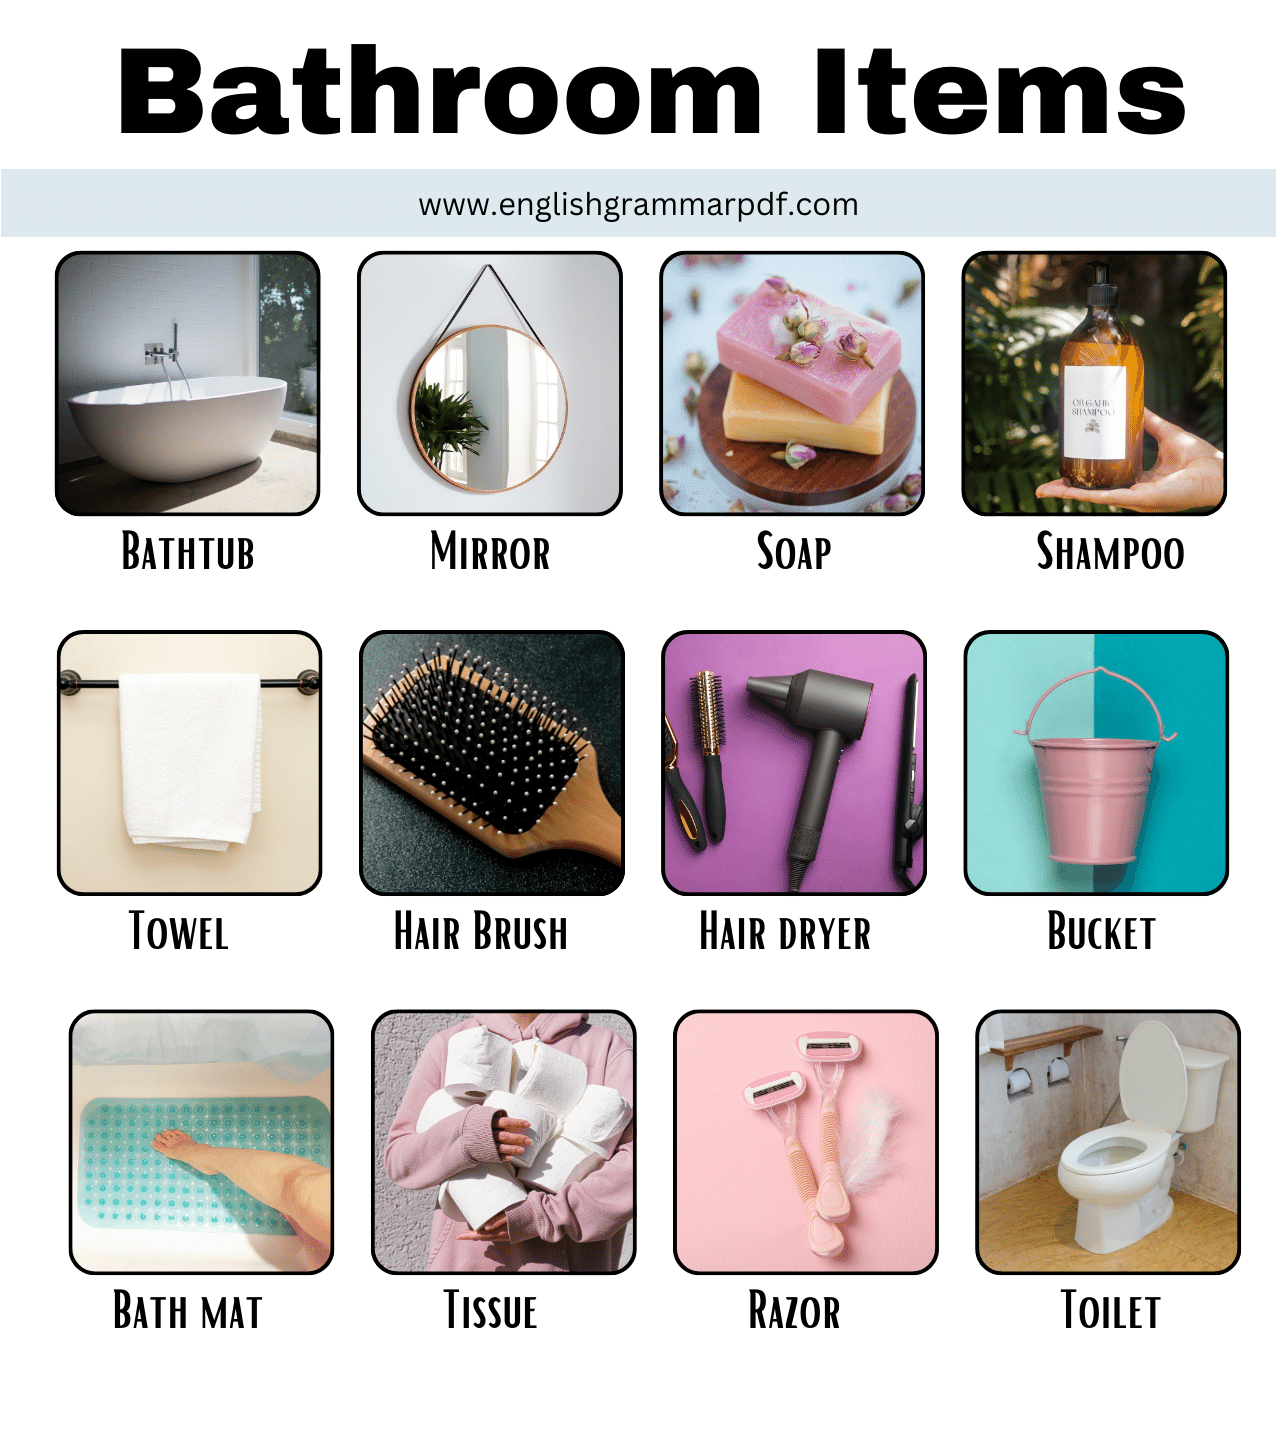 Bathroom Items (1)